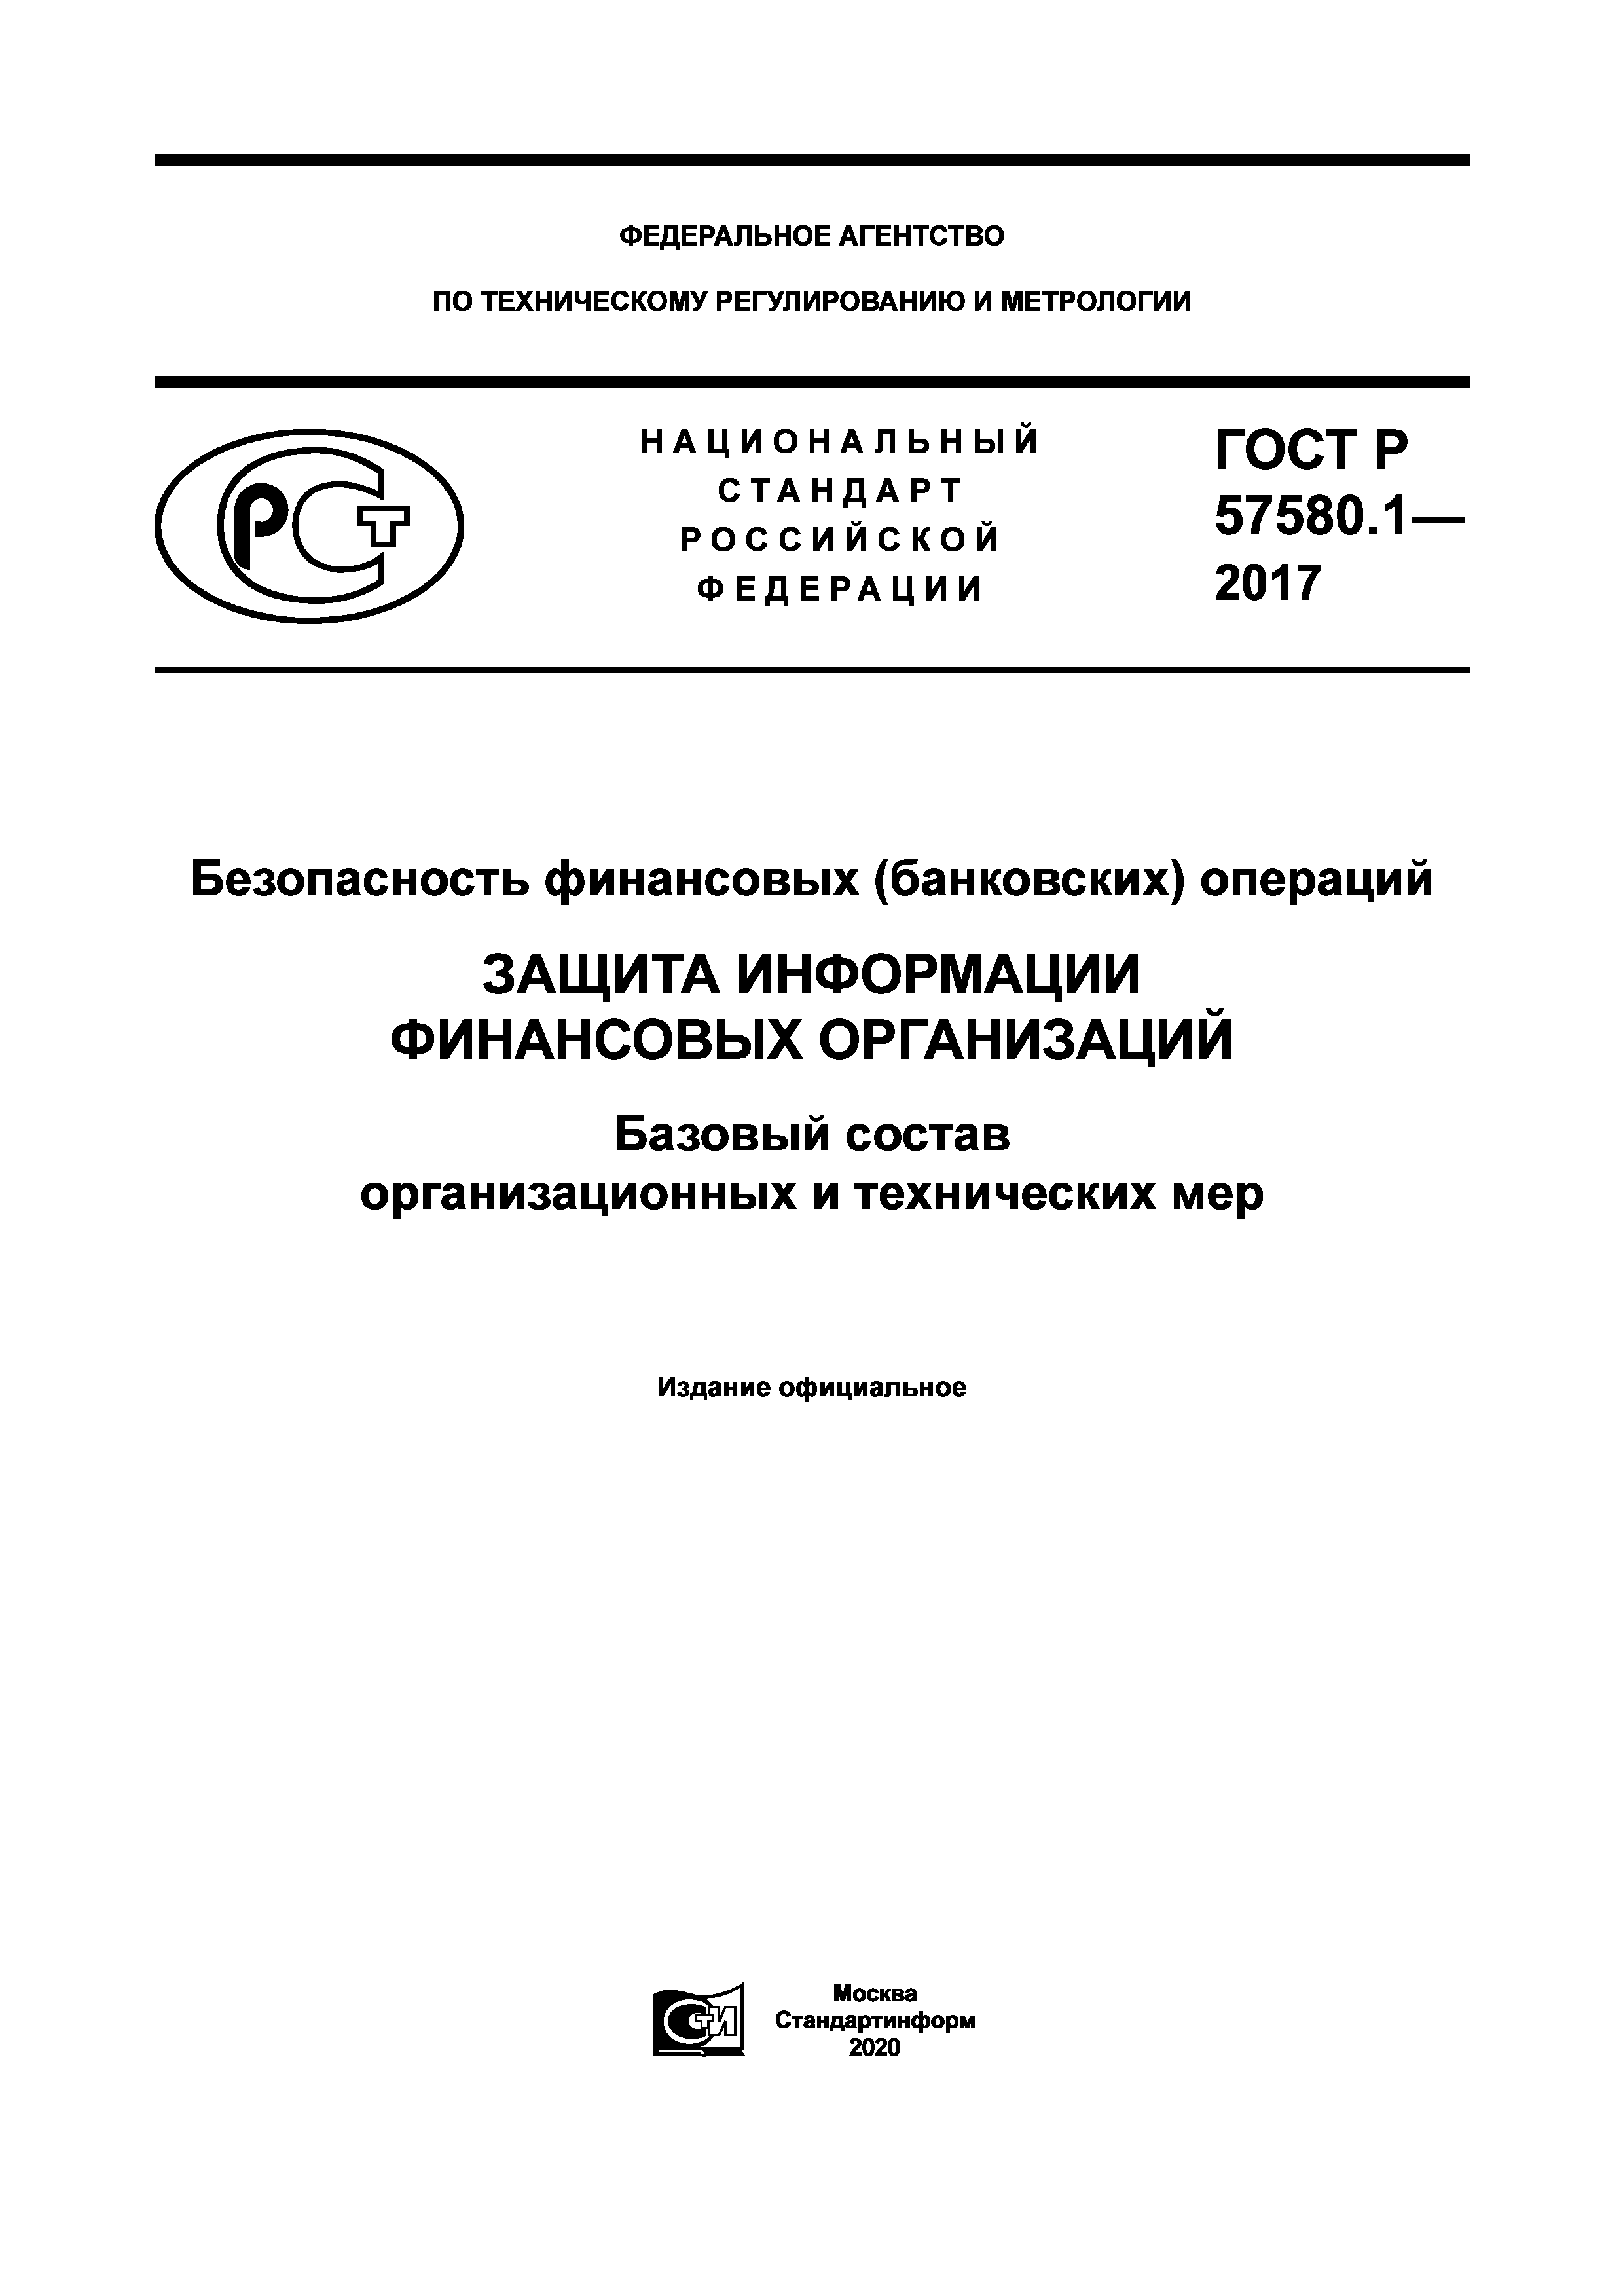 ГОСТ Р 57580.1-2017